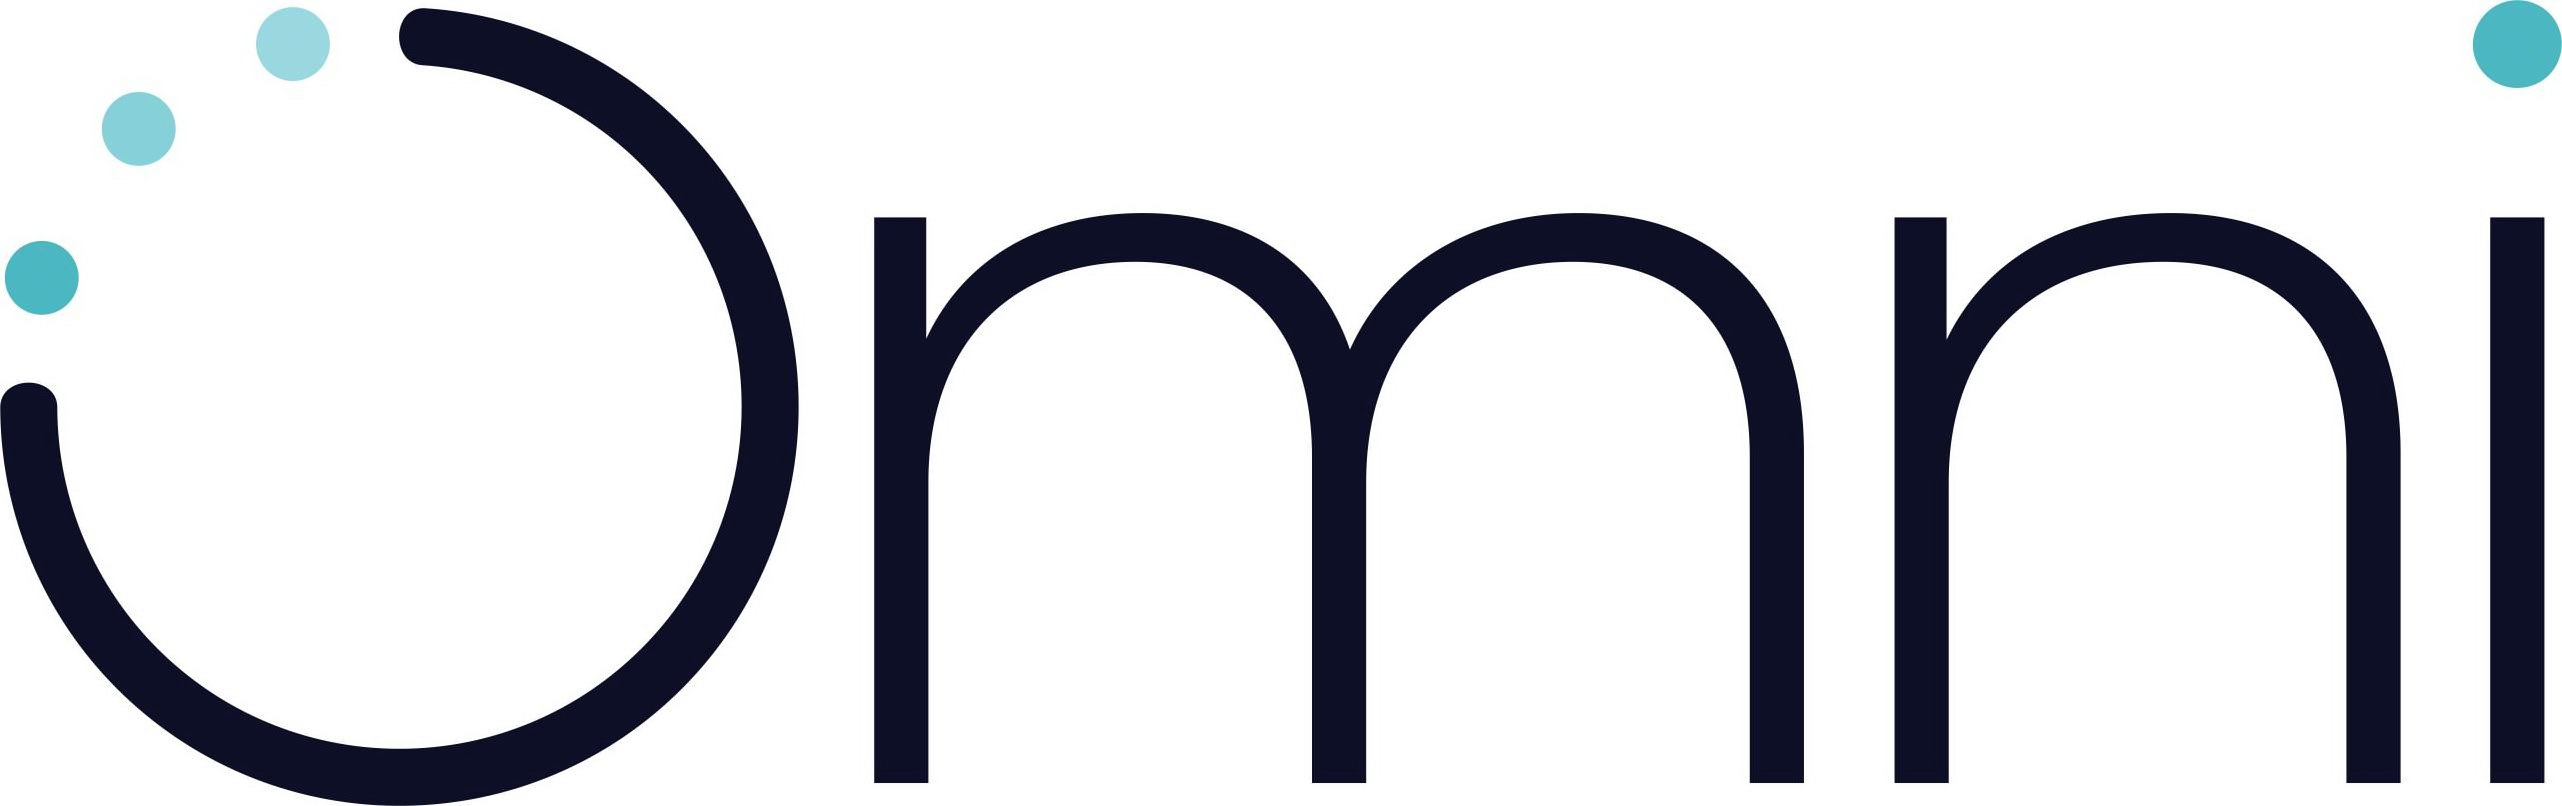 Trademark Logo OMNI